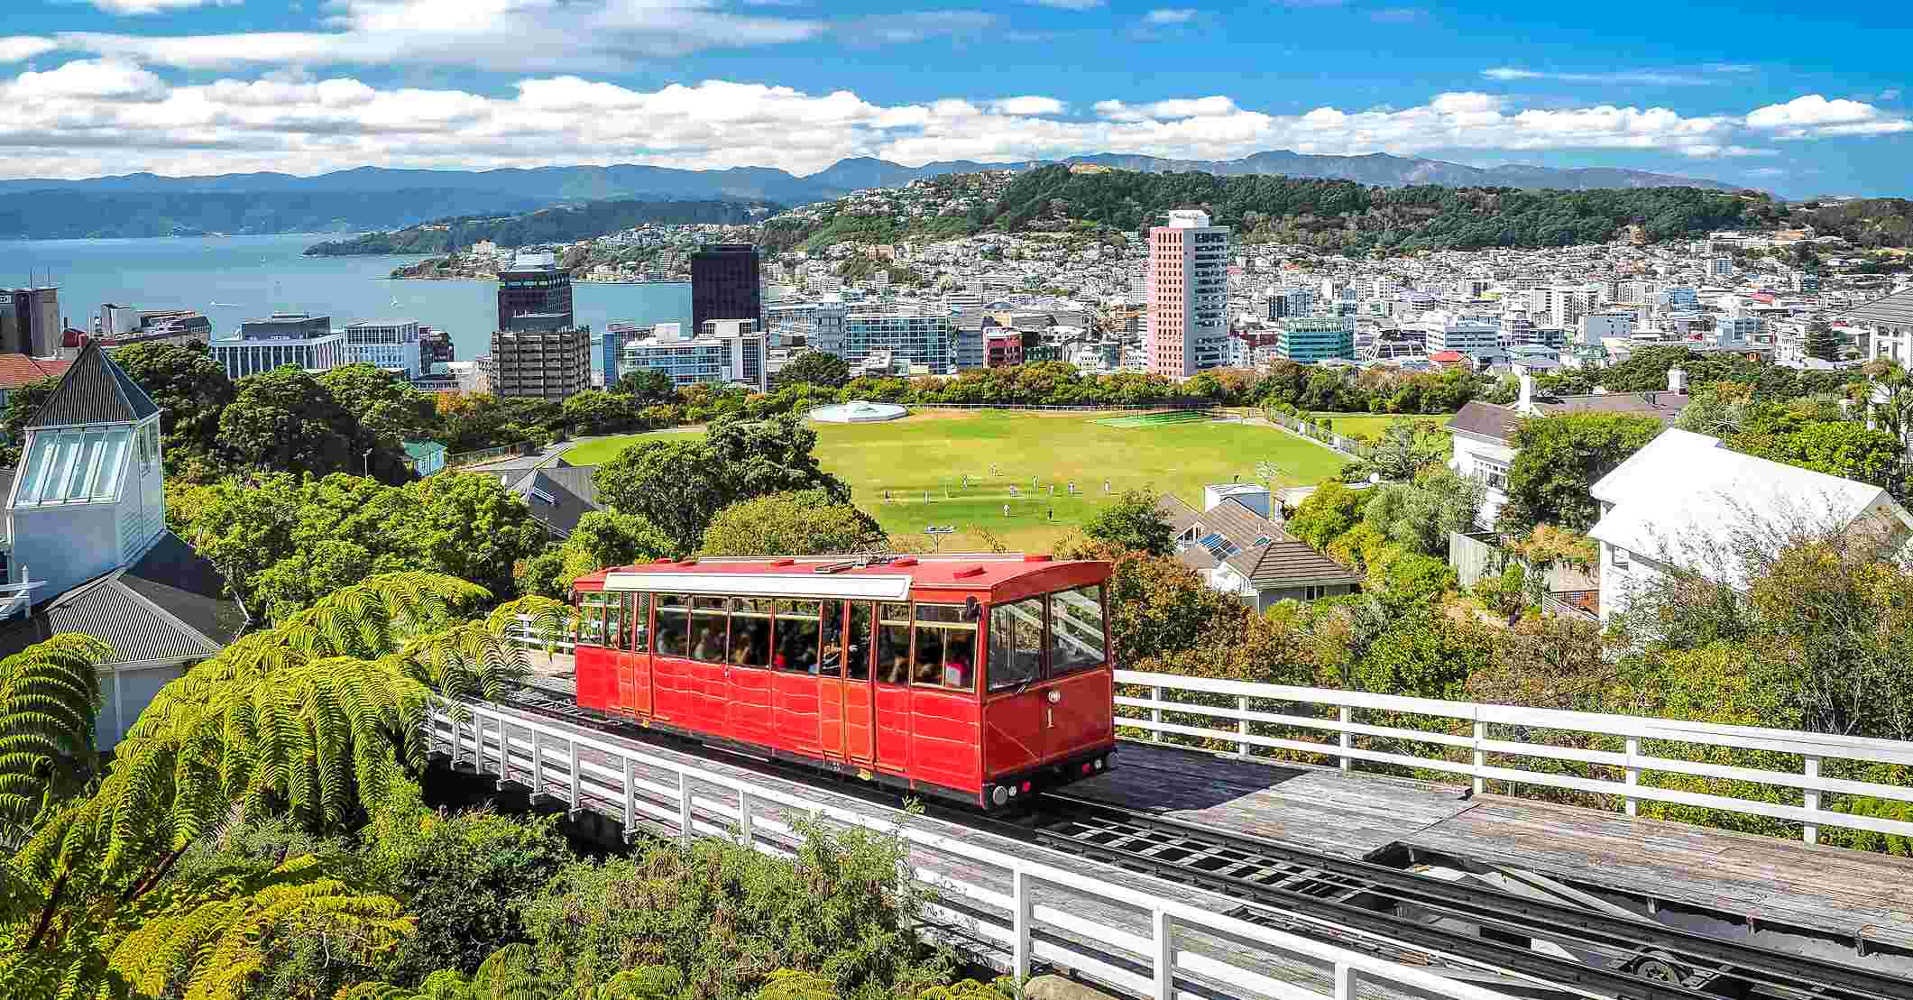 Wellington Cable Car, The most famous landmark in Wellington, New Zealand